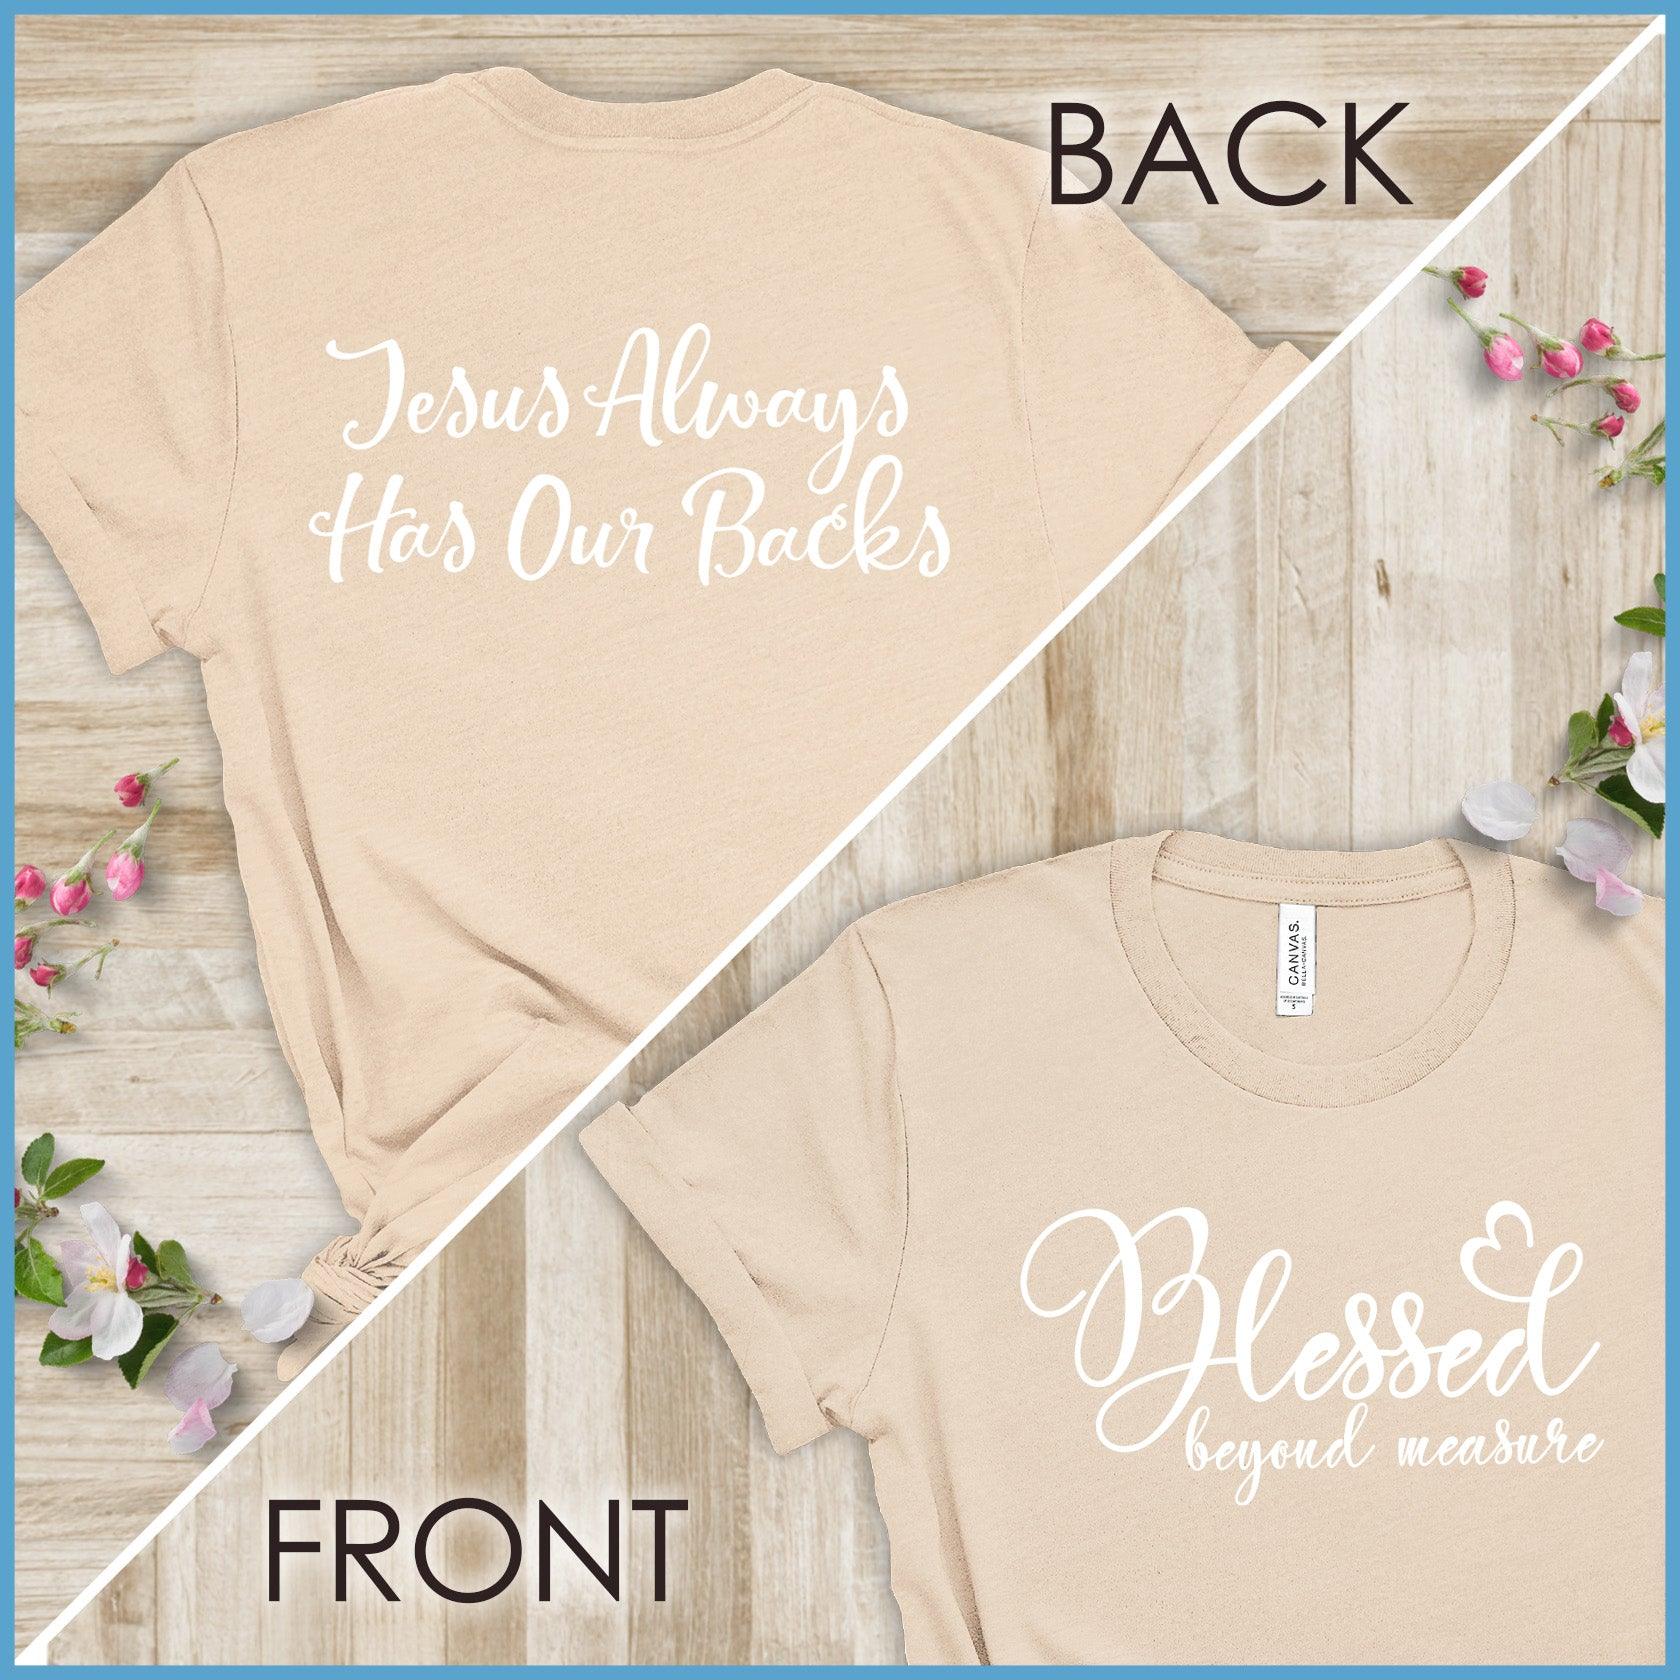 Blessed Beyond Measure, Jesus Has Our Backs T-Shirt - Brooke & Belle